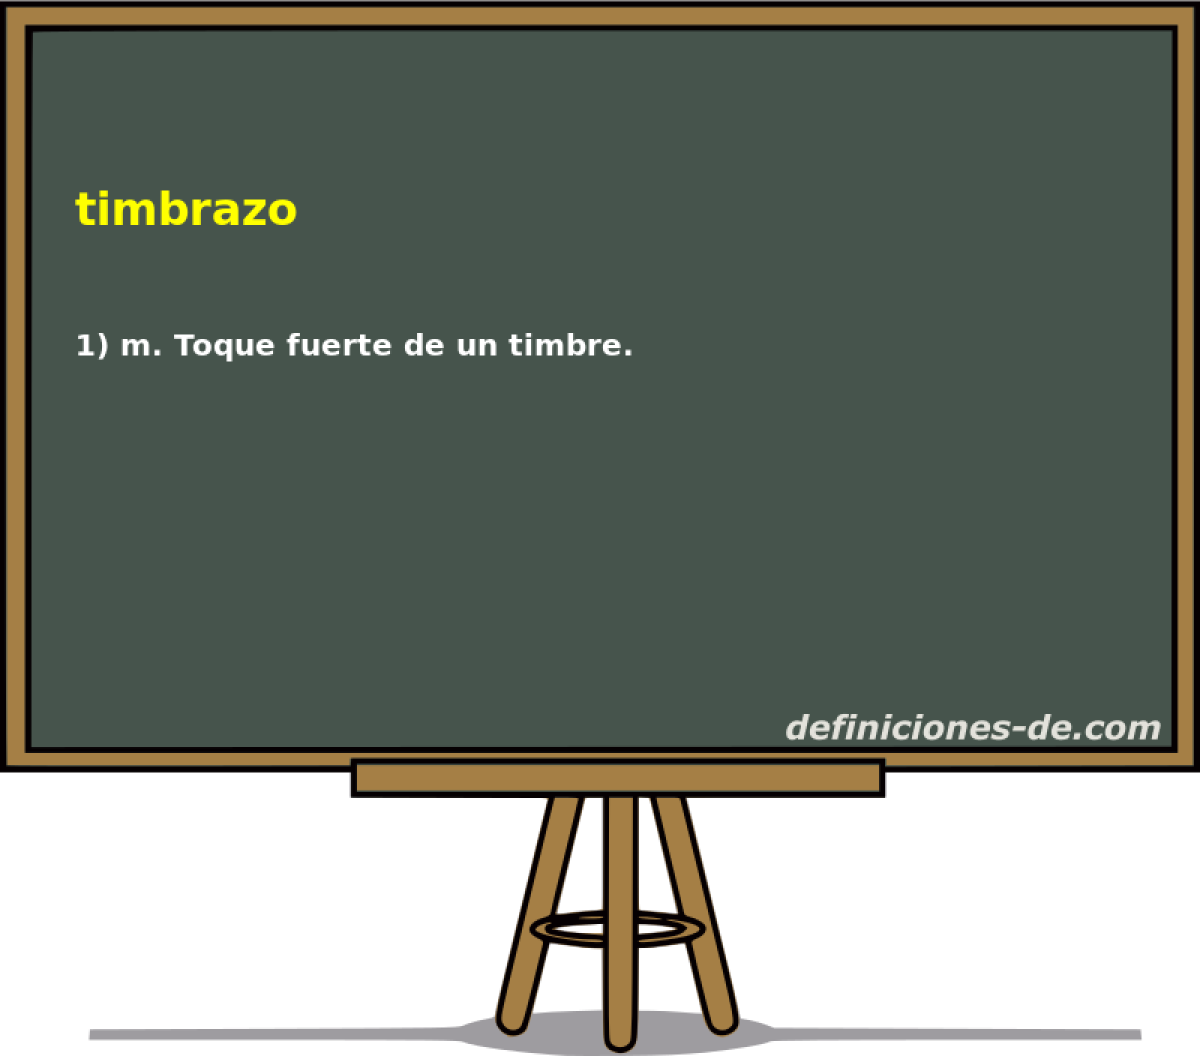 timbrazo 